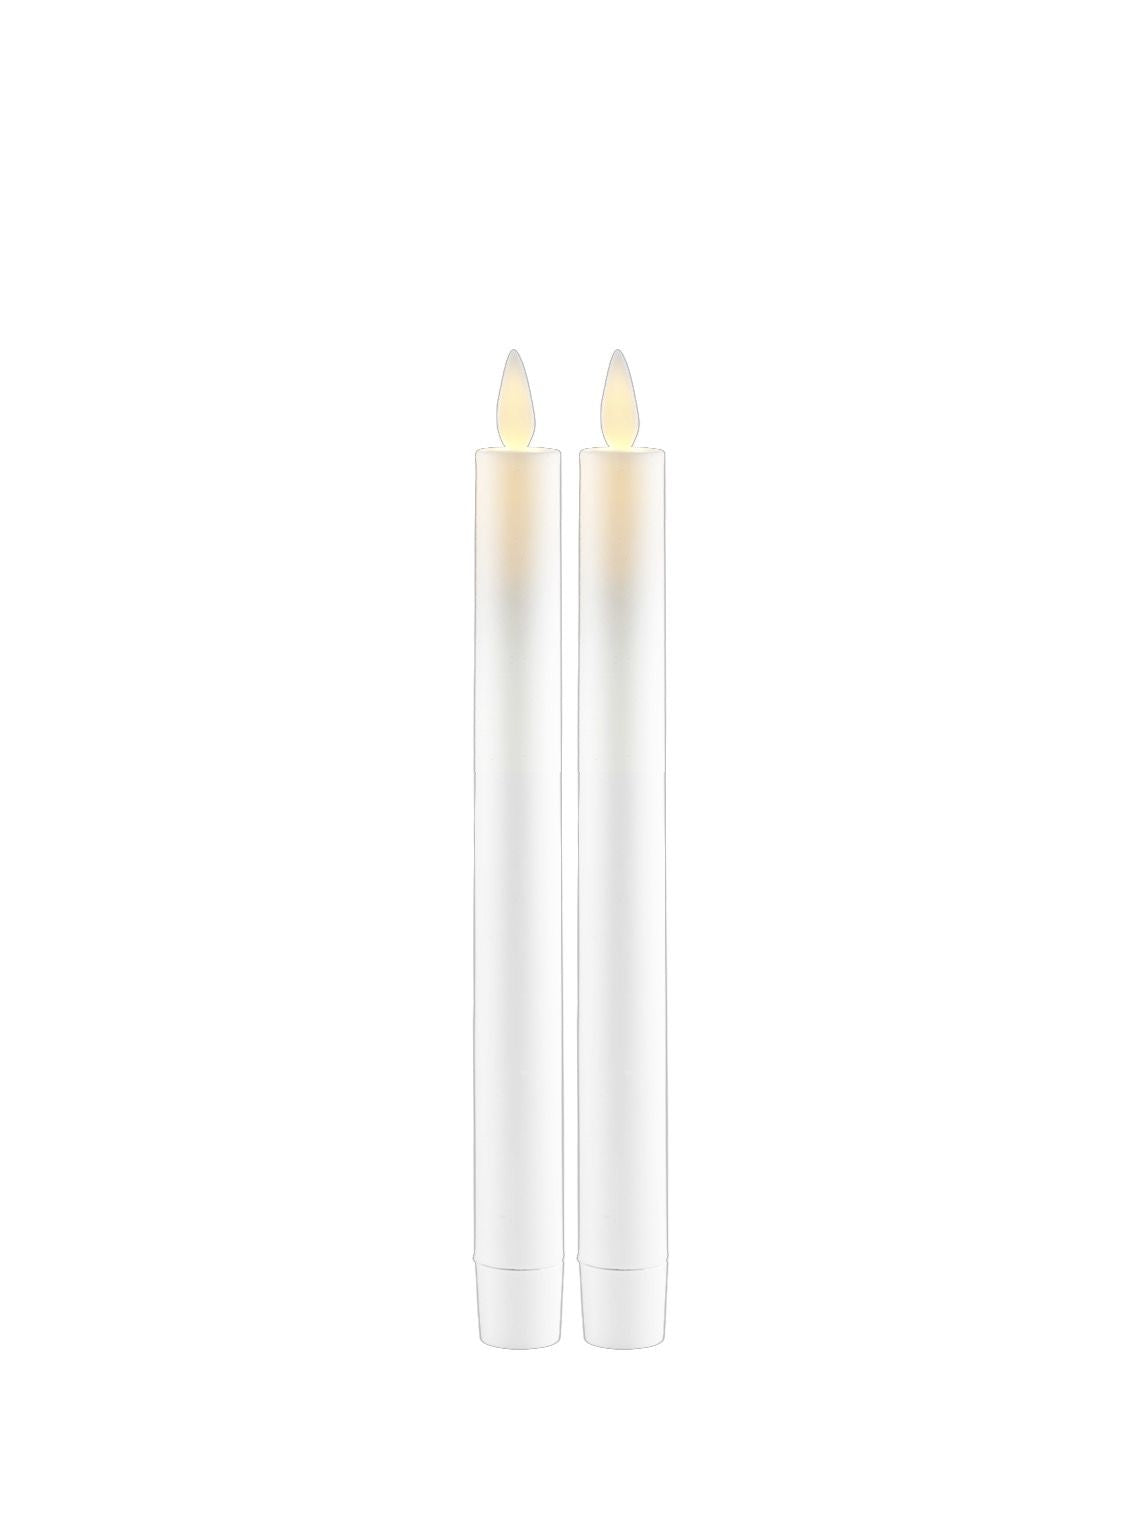 Sirius Sara wiederaufladende Krone LED Candle White, Ø2,2x H25 cm